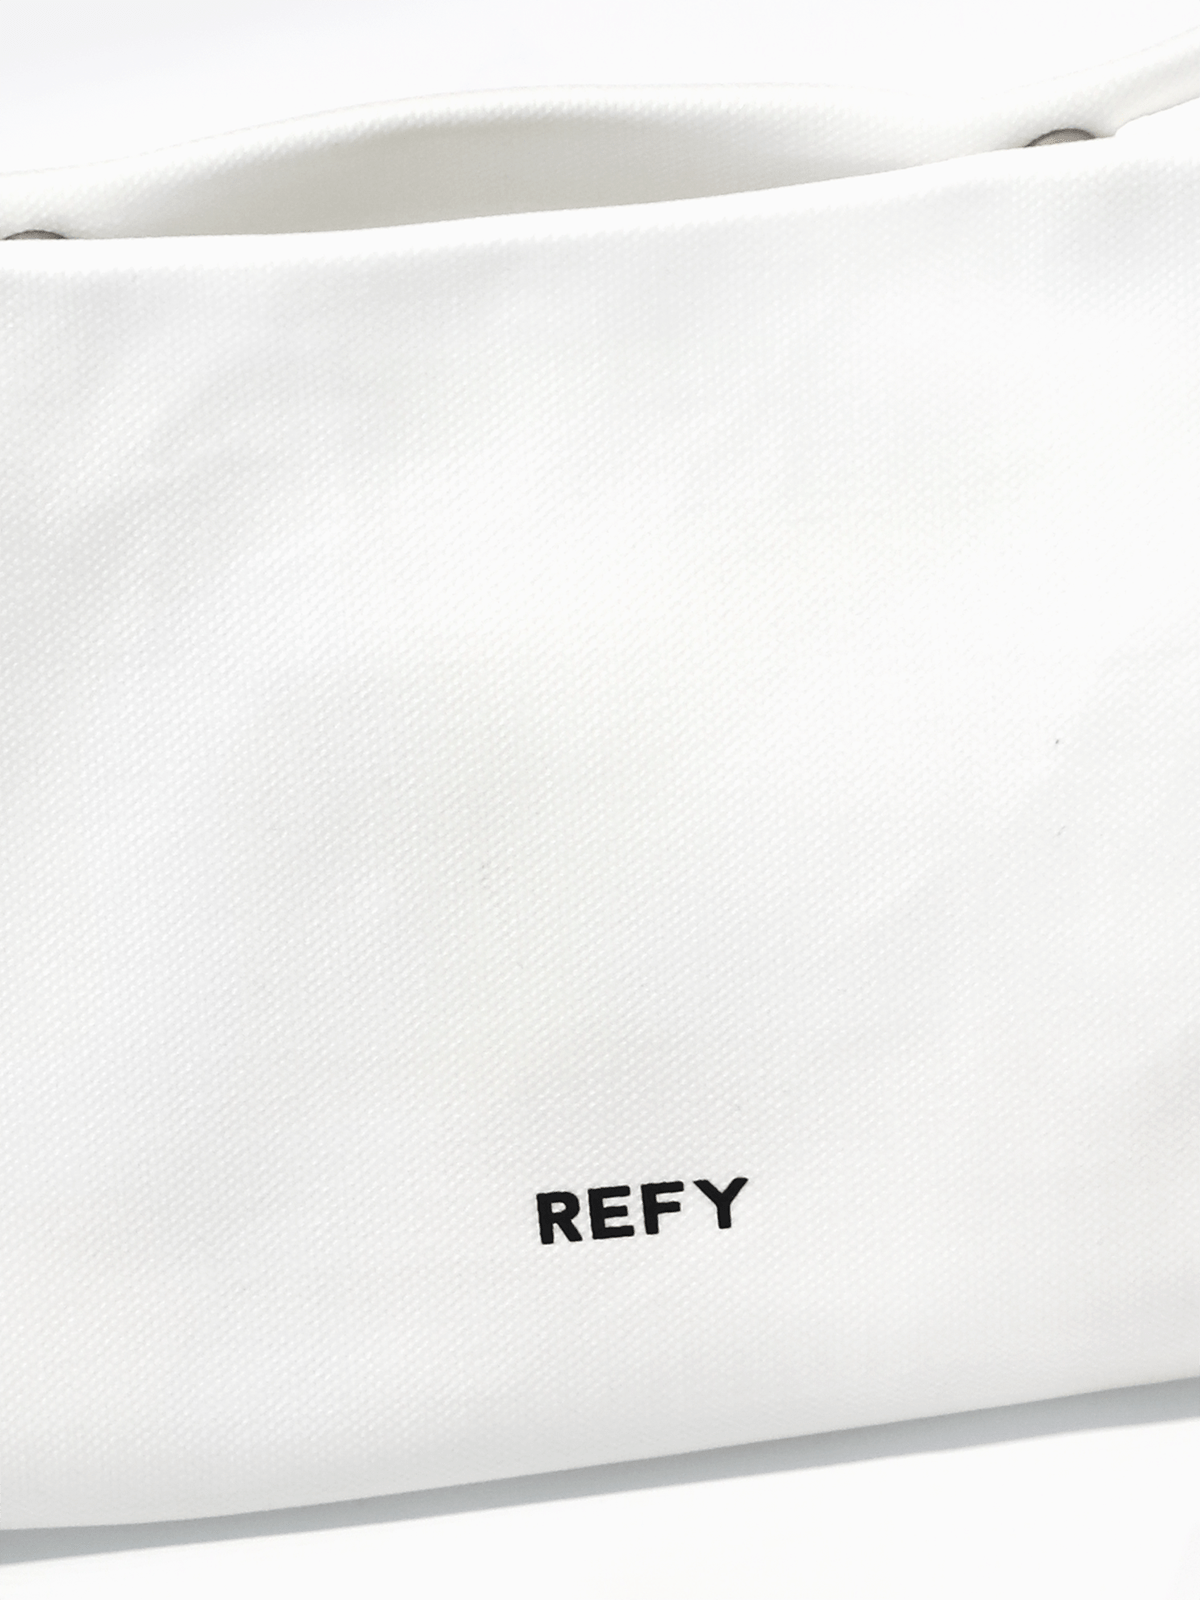 REFY Signature Bag